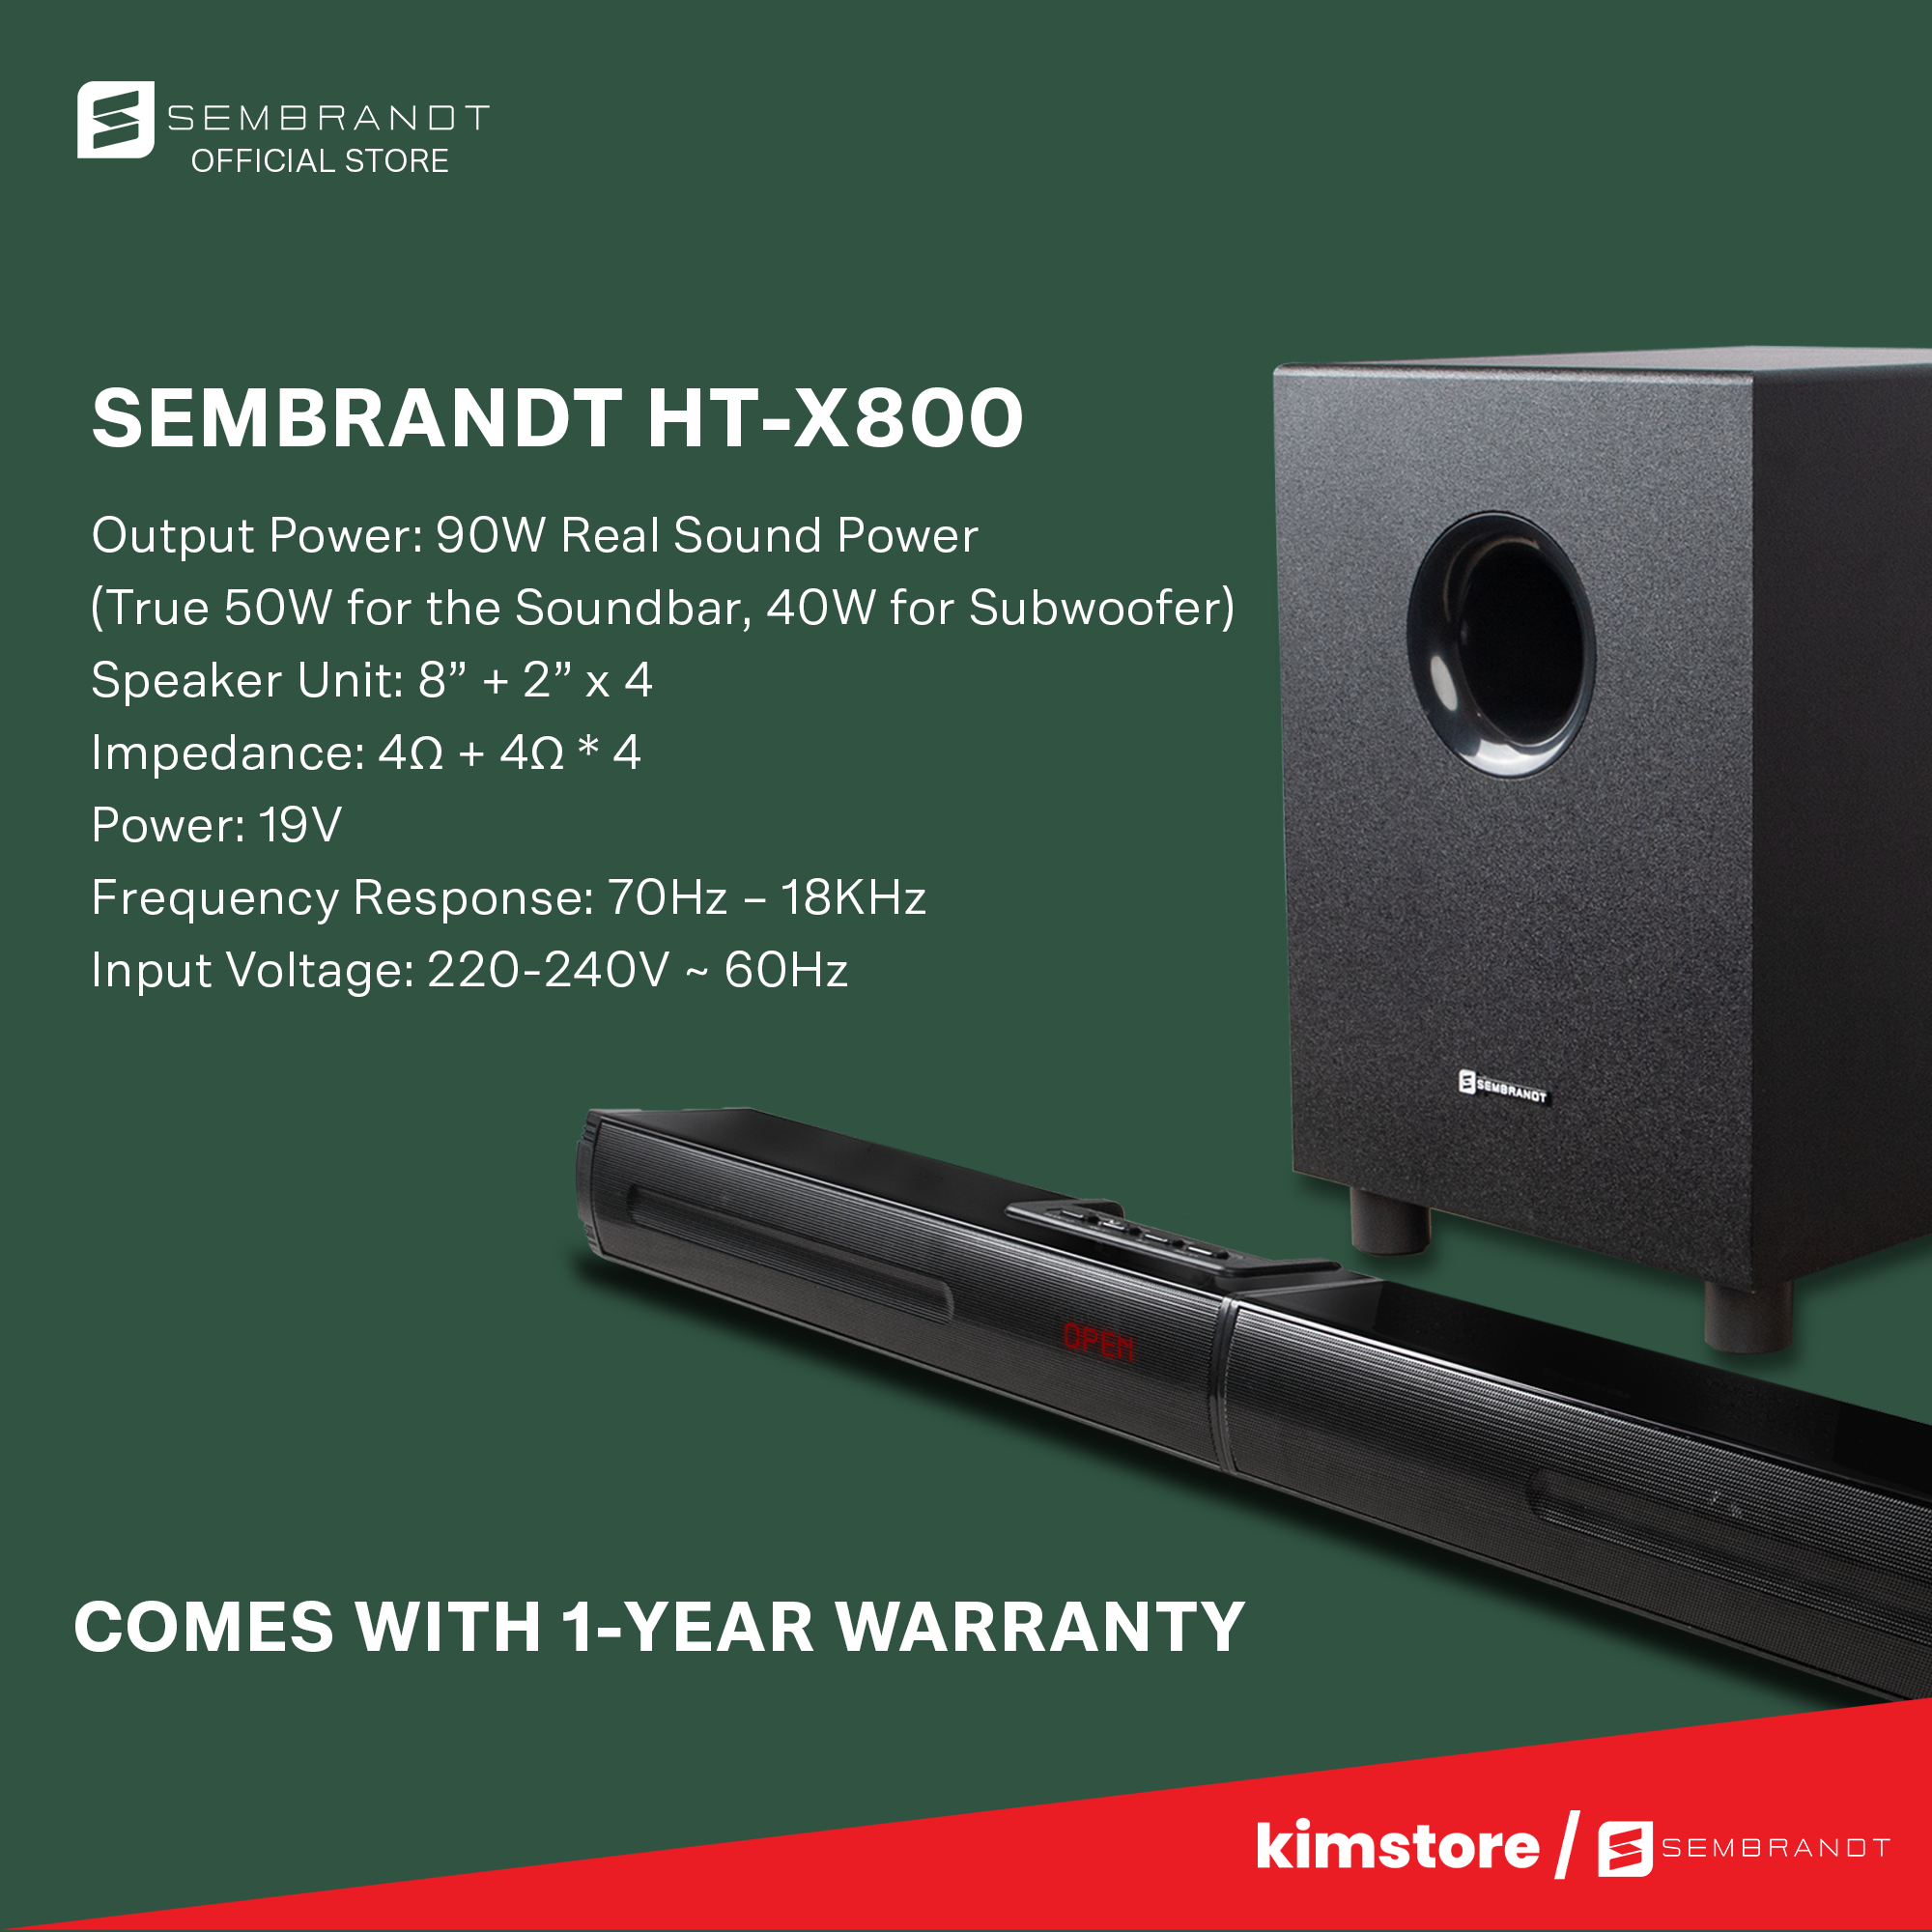 Sembrandt HT-X800 Soundbar with Subwoofer